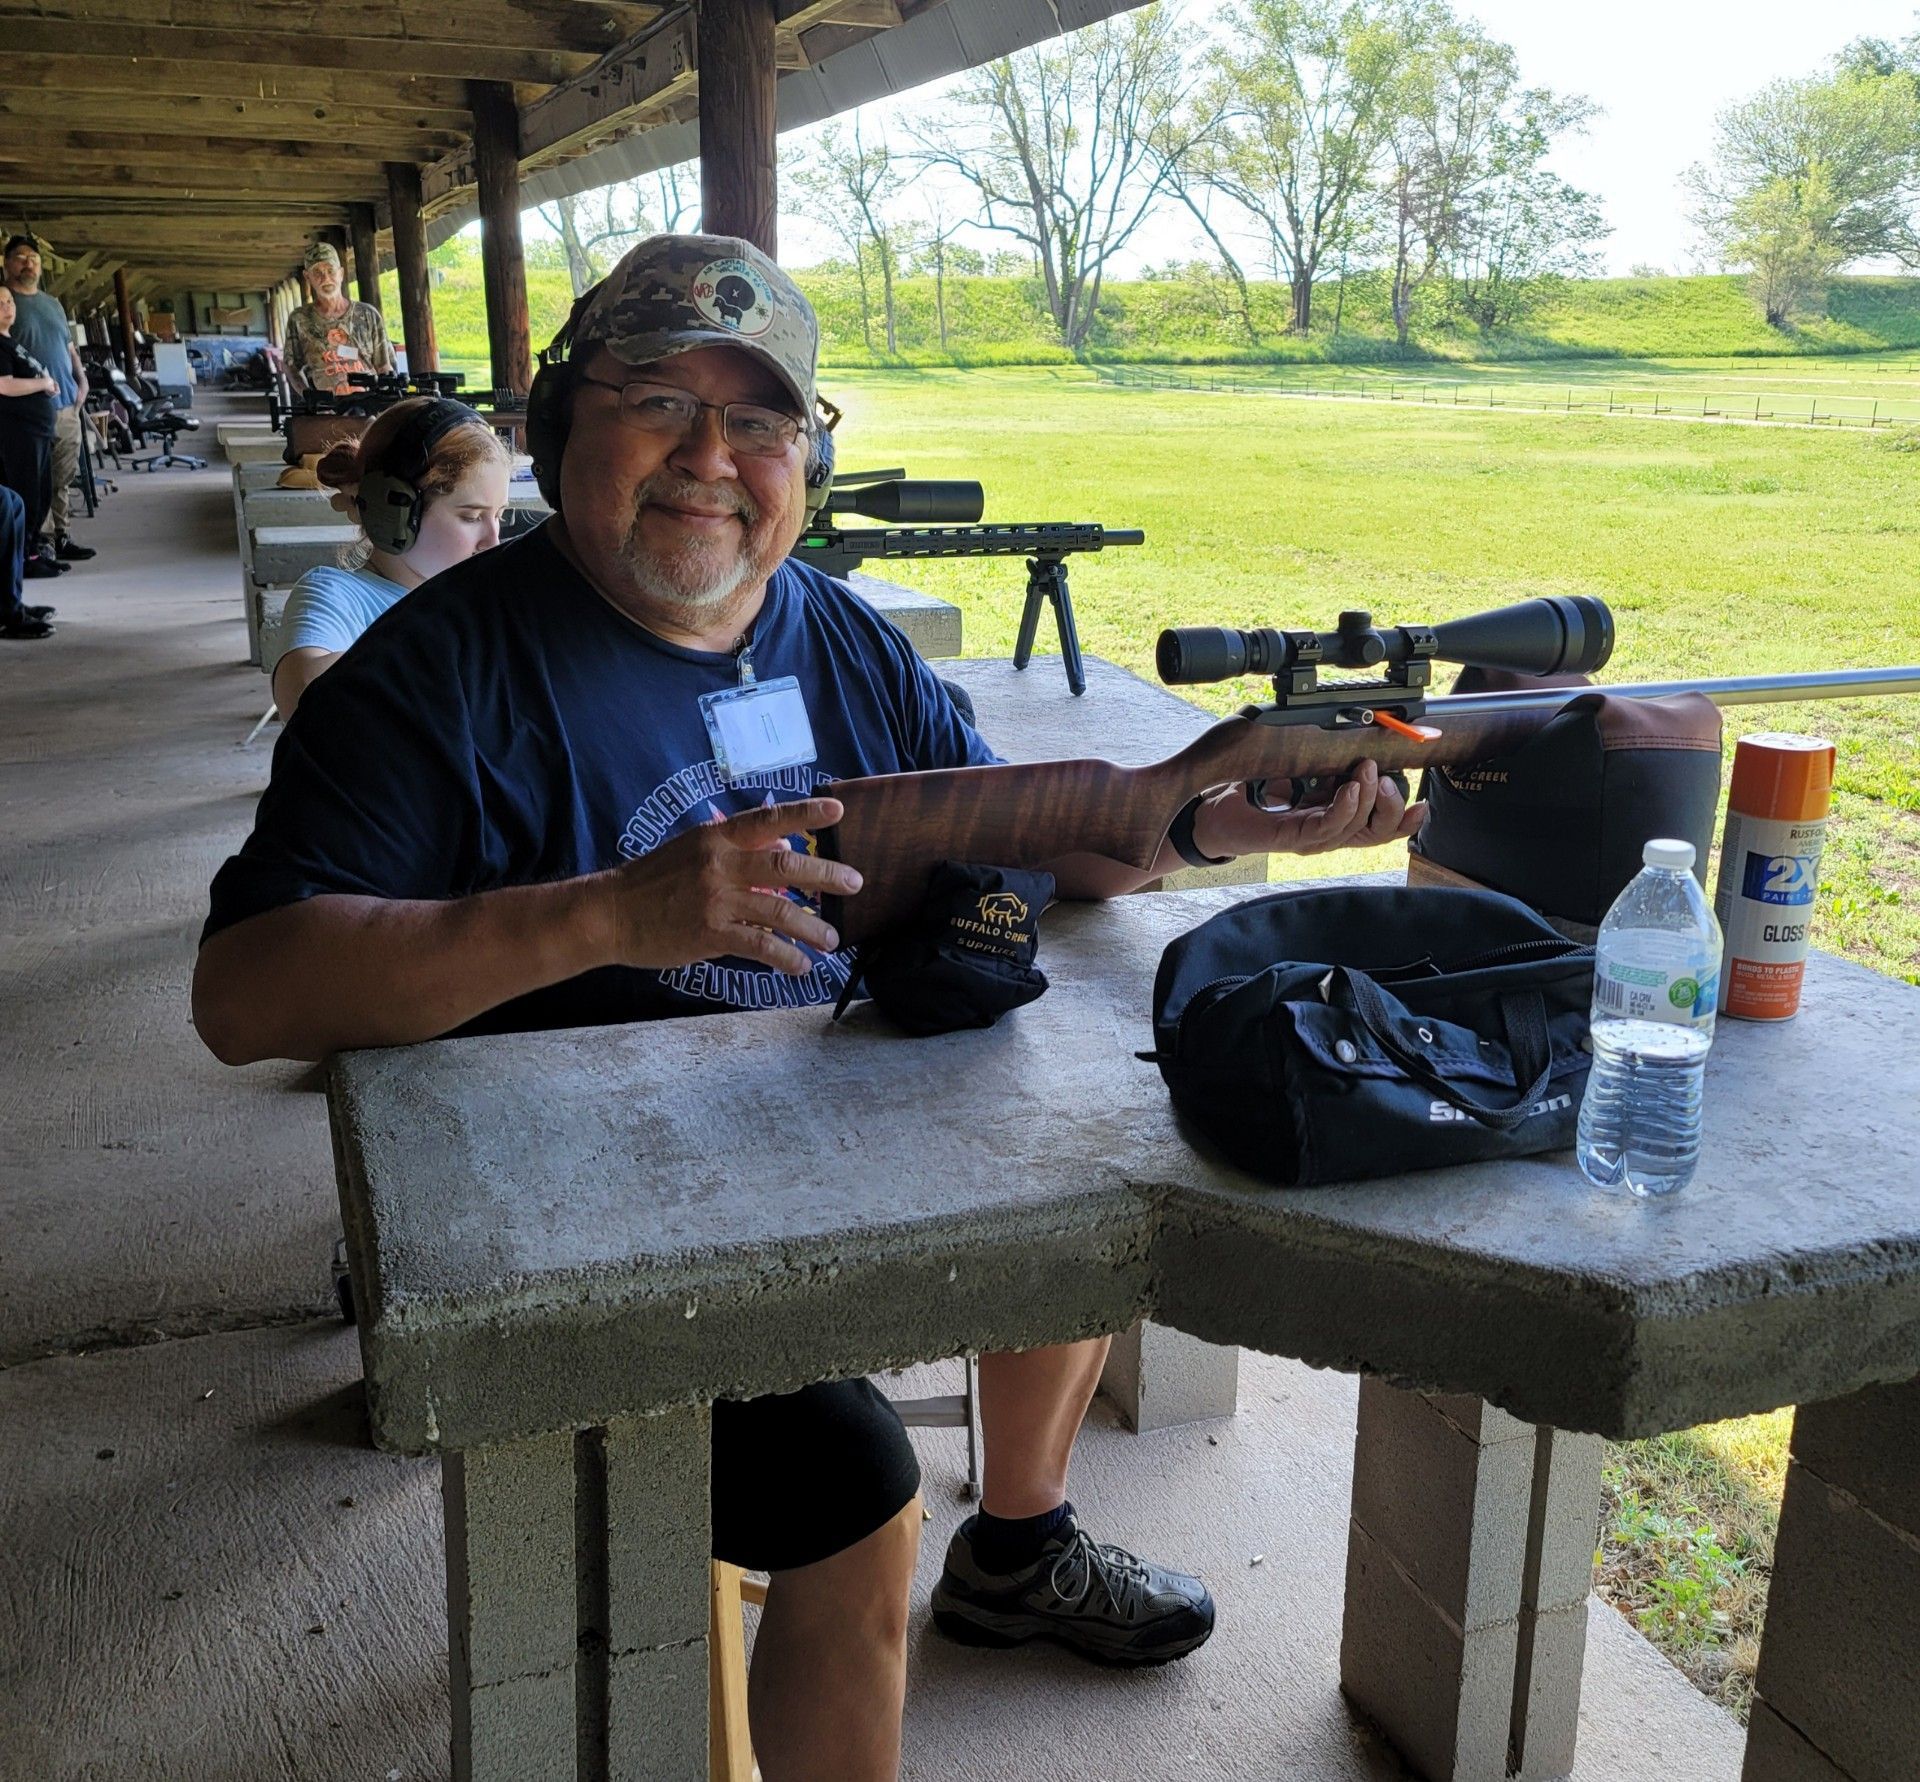 man in blue shirt smiling at camera sitting with rifle at gun range table